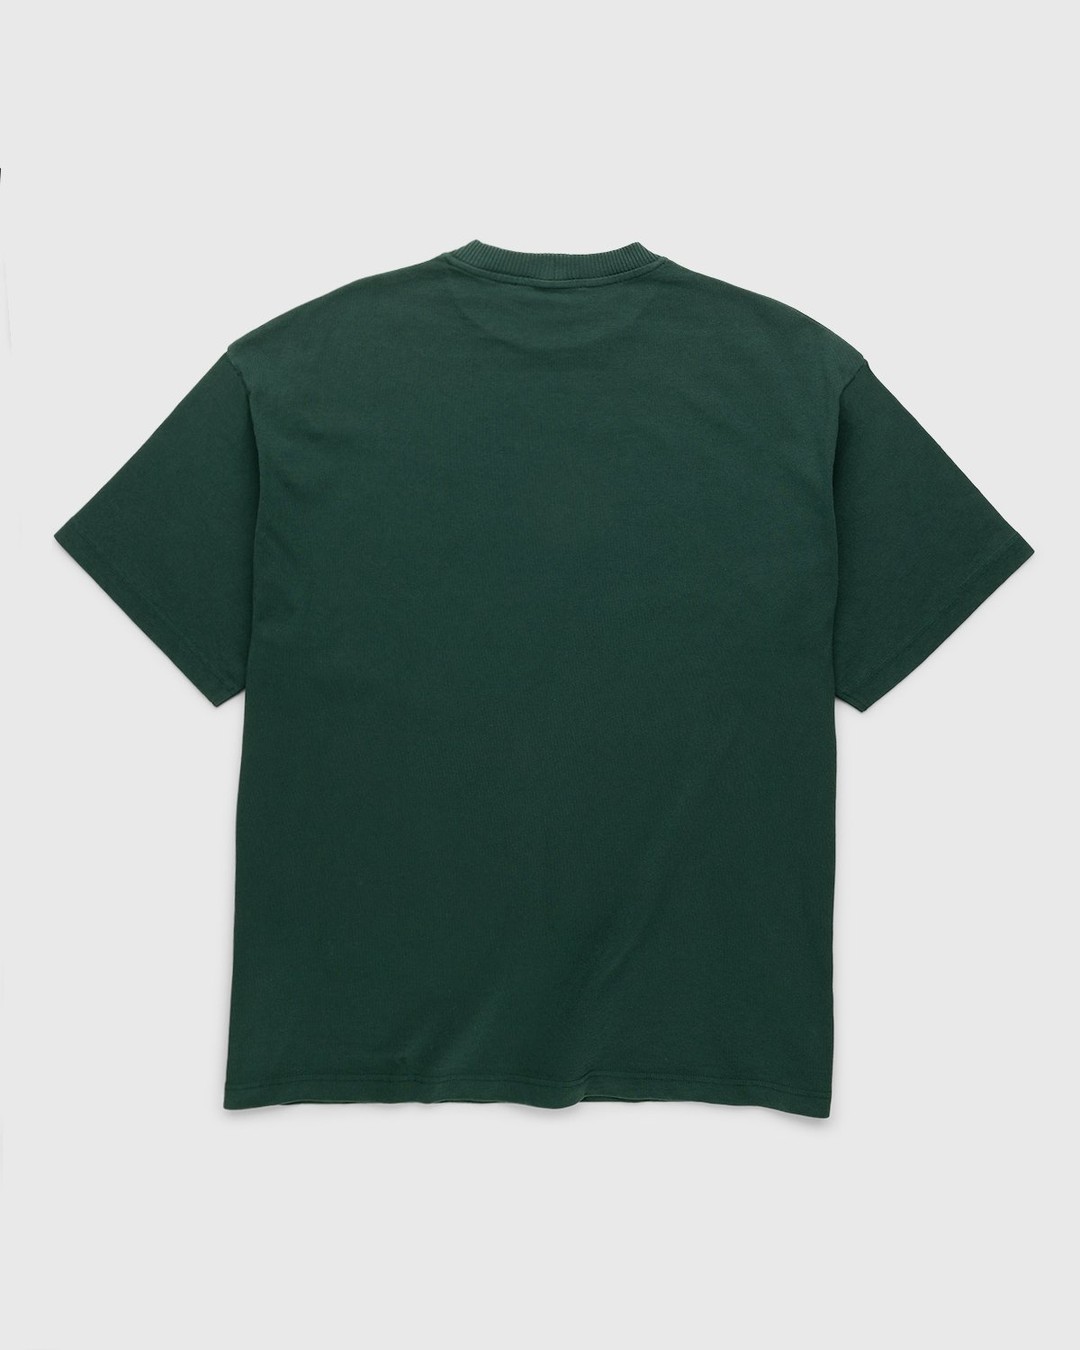 Acne Studios – Cotton Logo T-Shirt Deep Green - Tops - Green - Image 2